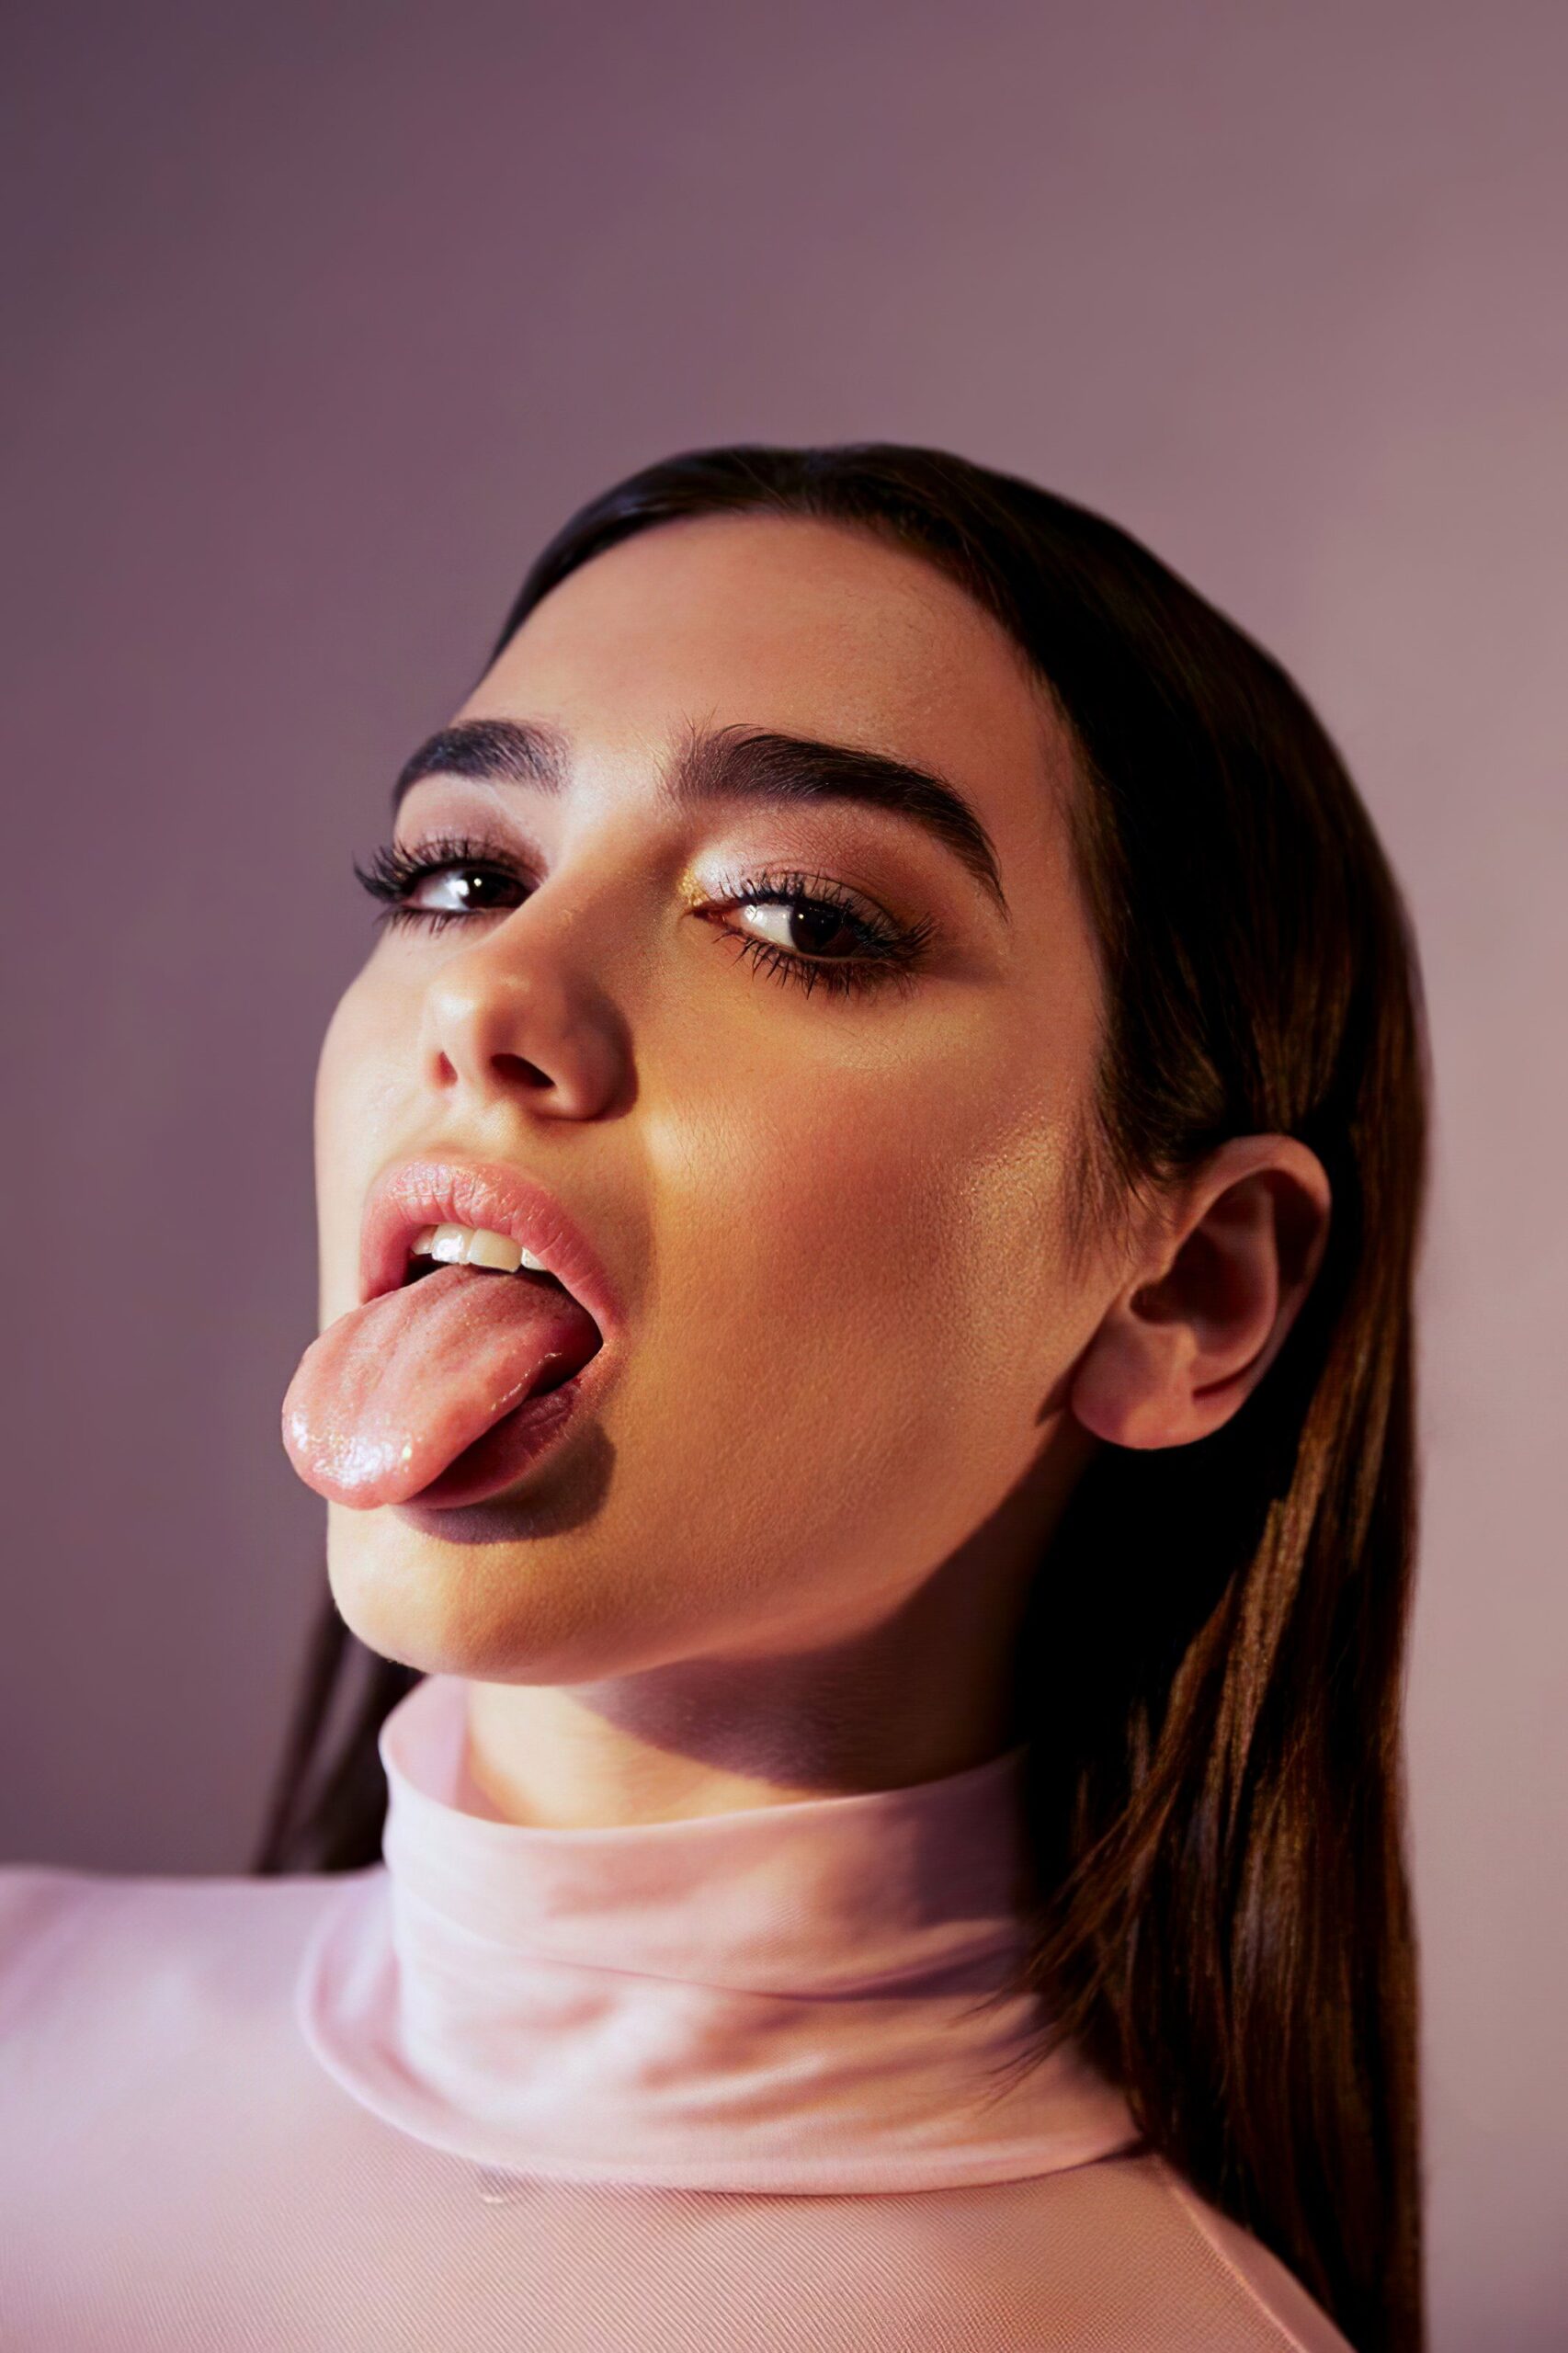 Want to suck on Dua Lipas tongue